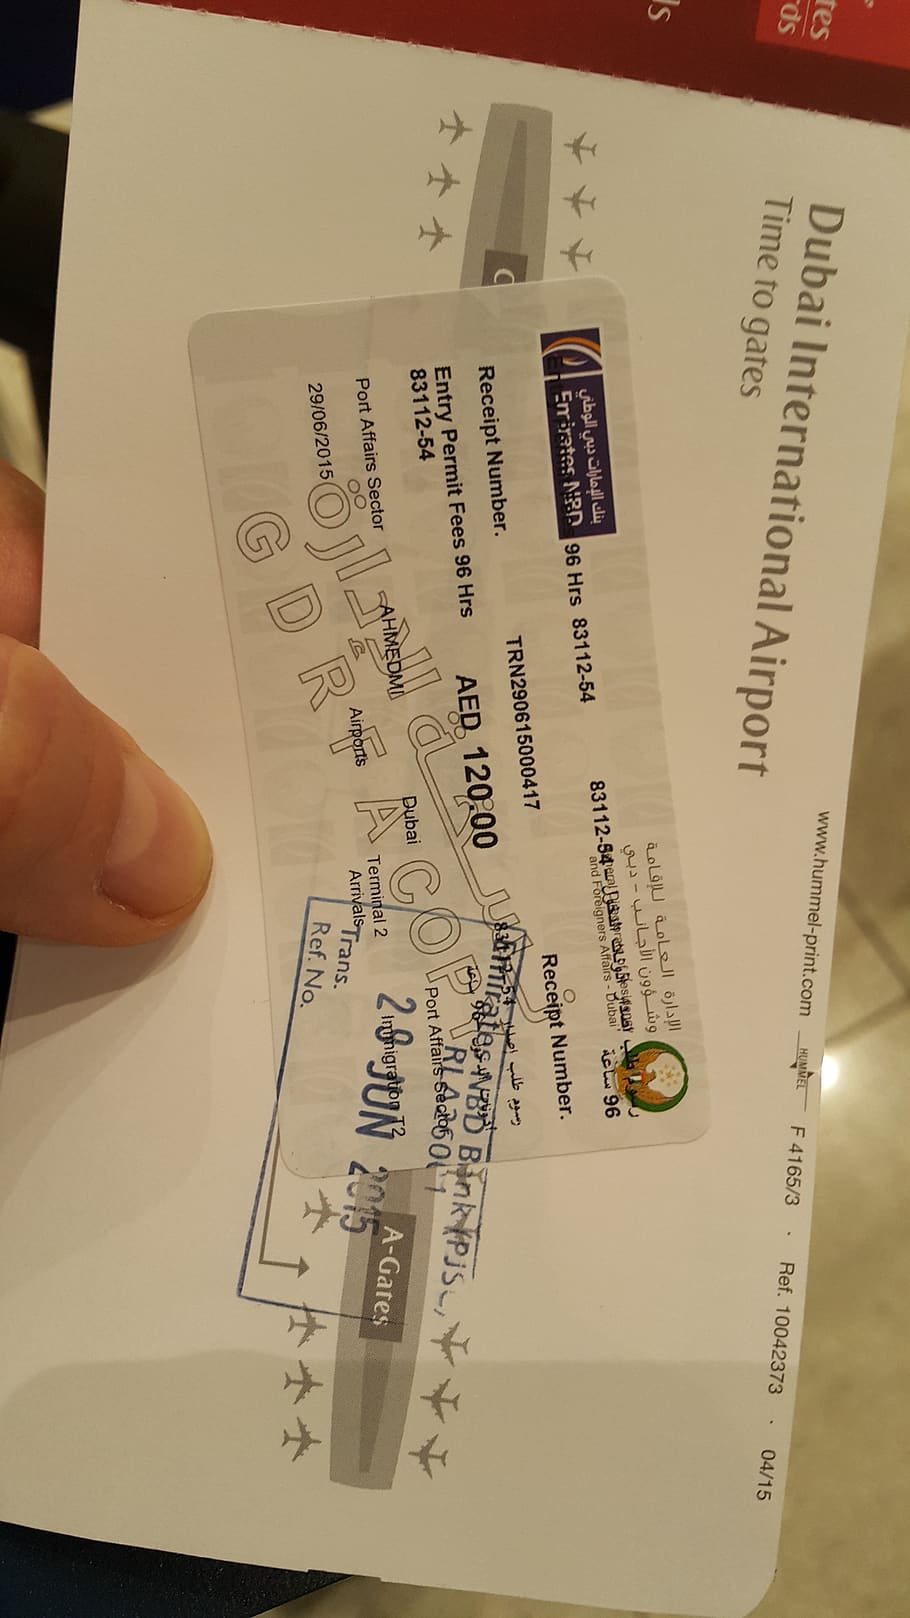 visa, dubai, emirates, ticket, travel, stamp, border, cross, fees, human hand